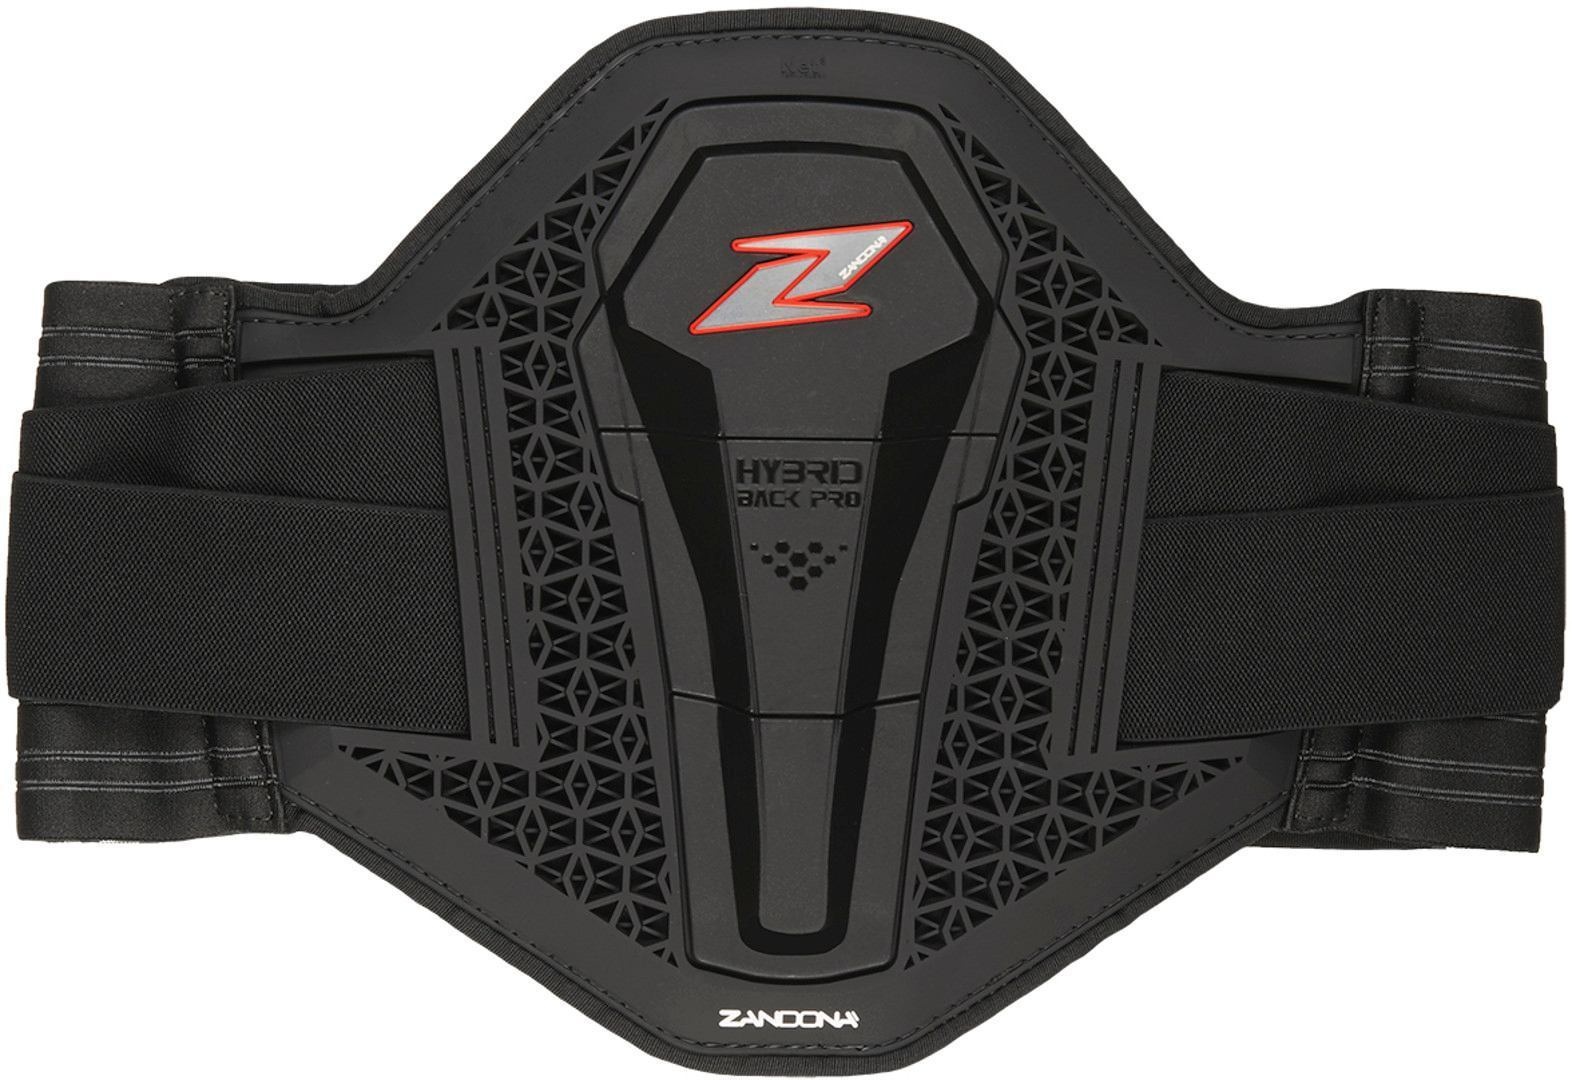 Zandona Hybrid Back Pro X3 Rugbeschermer, zwart, S